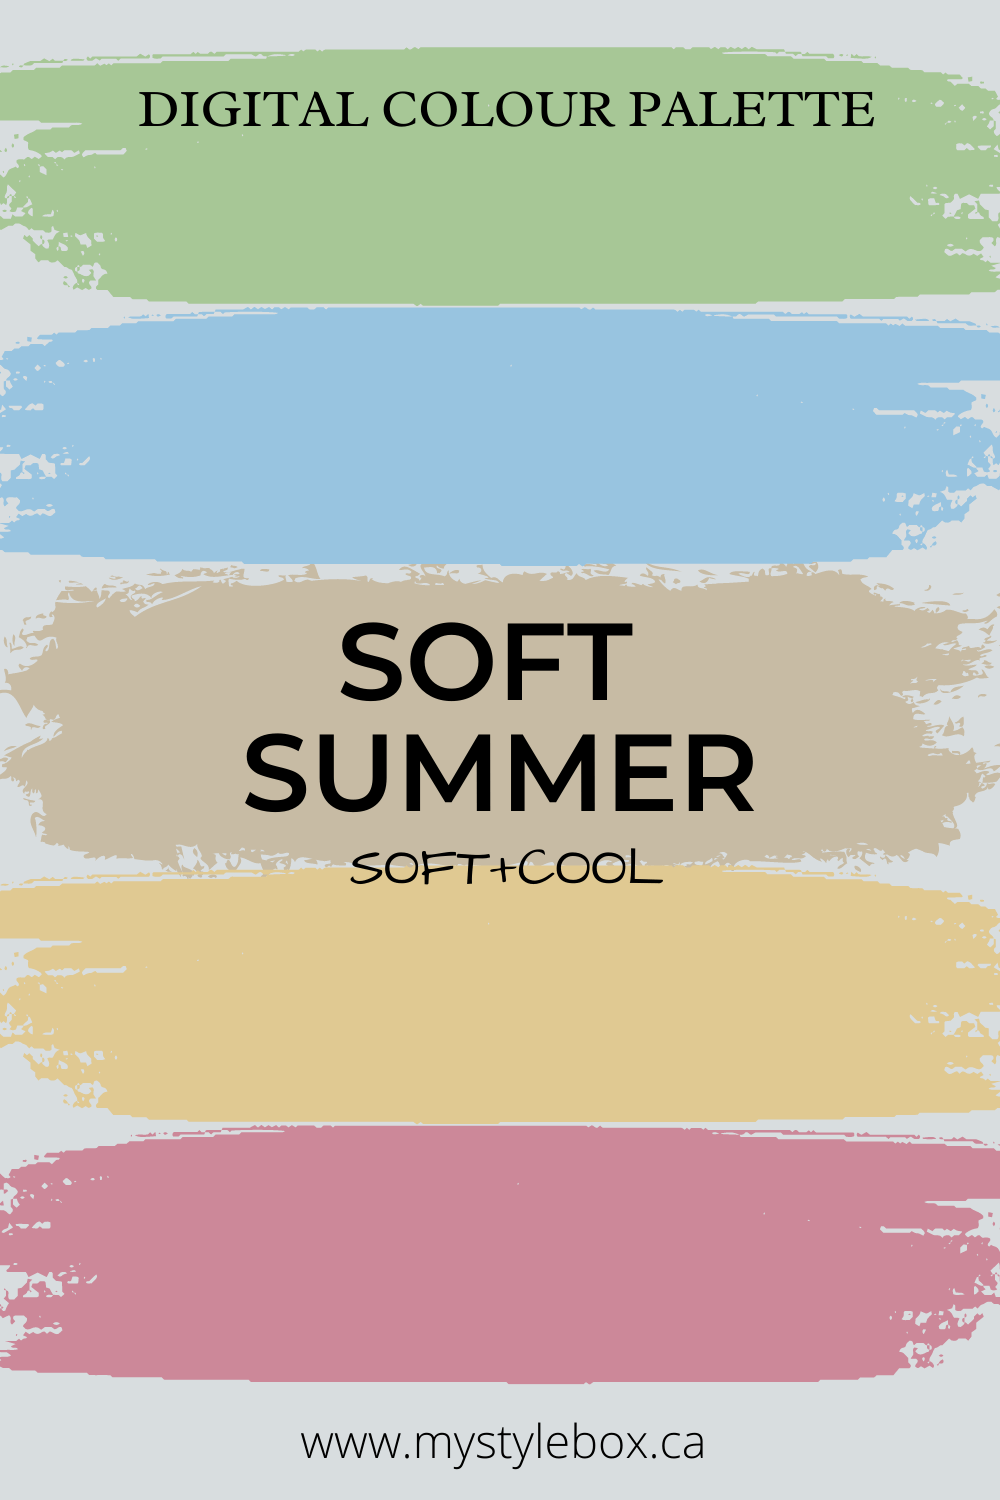 Soft Summer Season Digital Color Palette